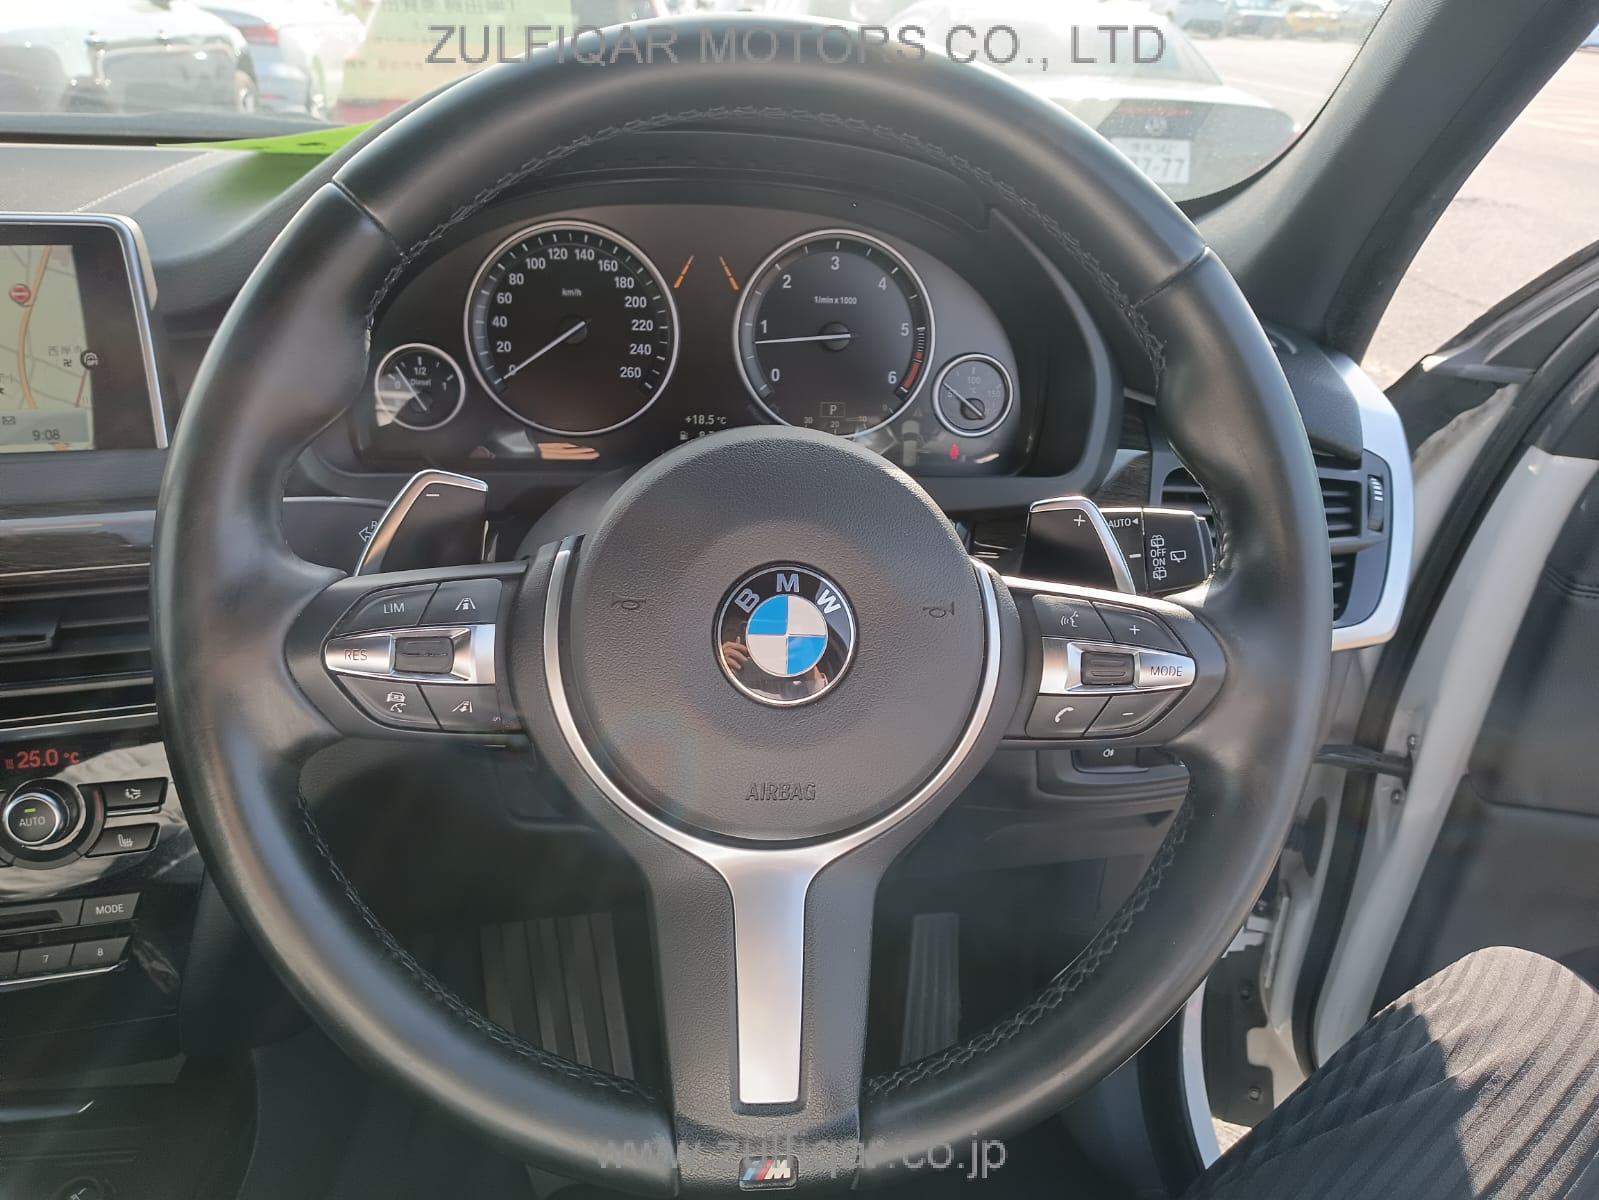 BMW X5 2016 Image 20